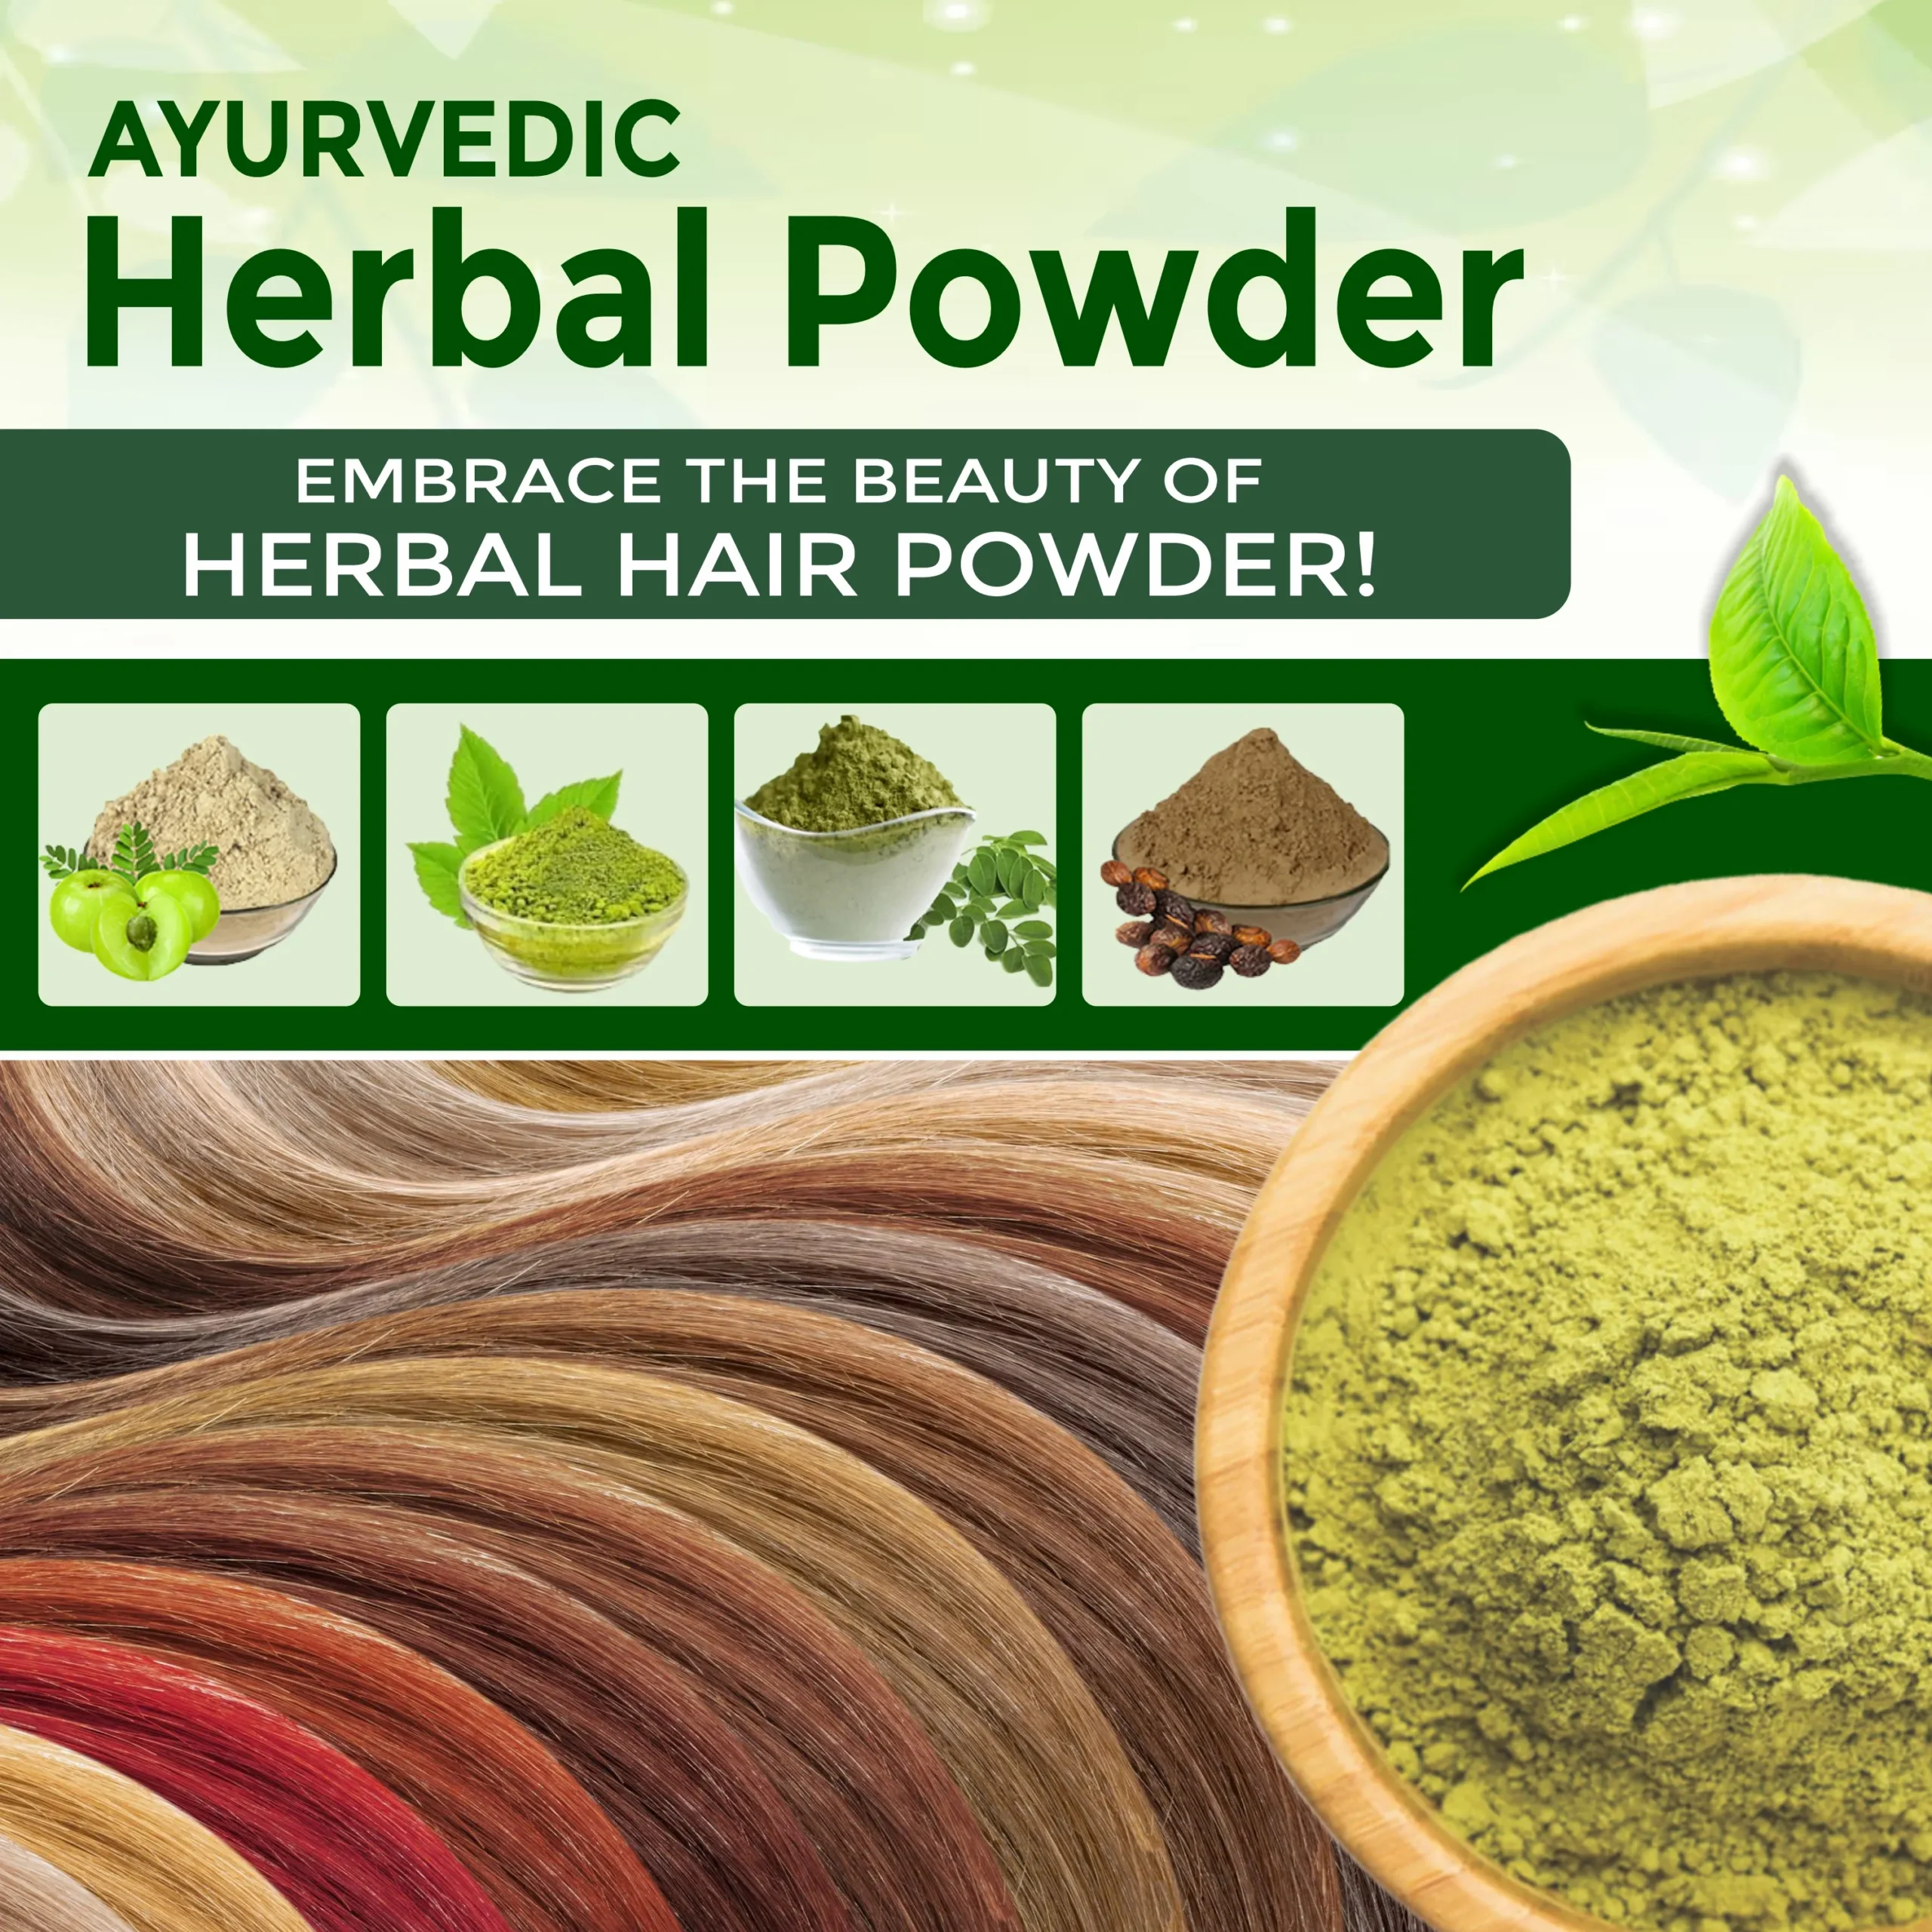 Ayurvedic Herbal Powder banner mobile - www.dkihenna.com